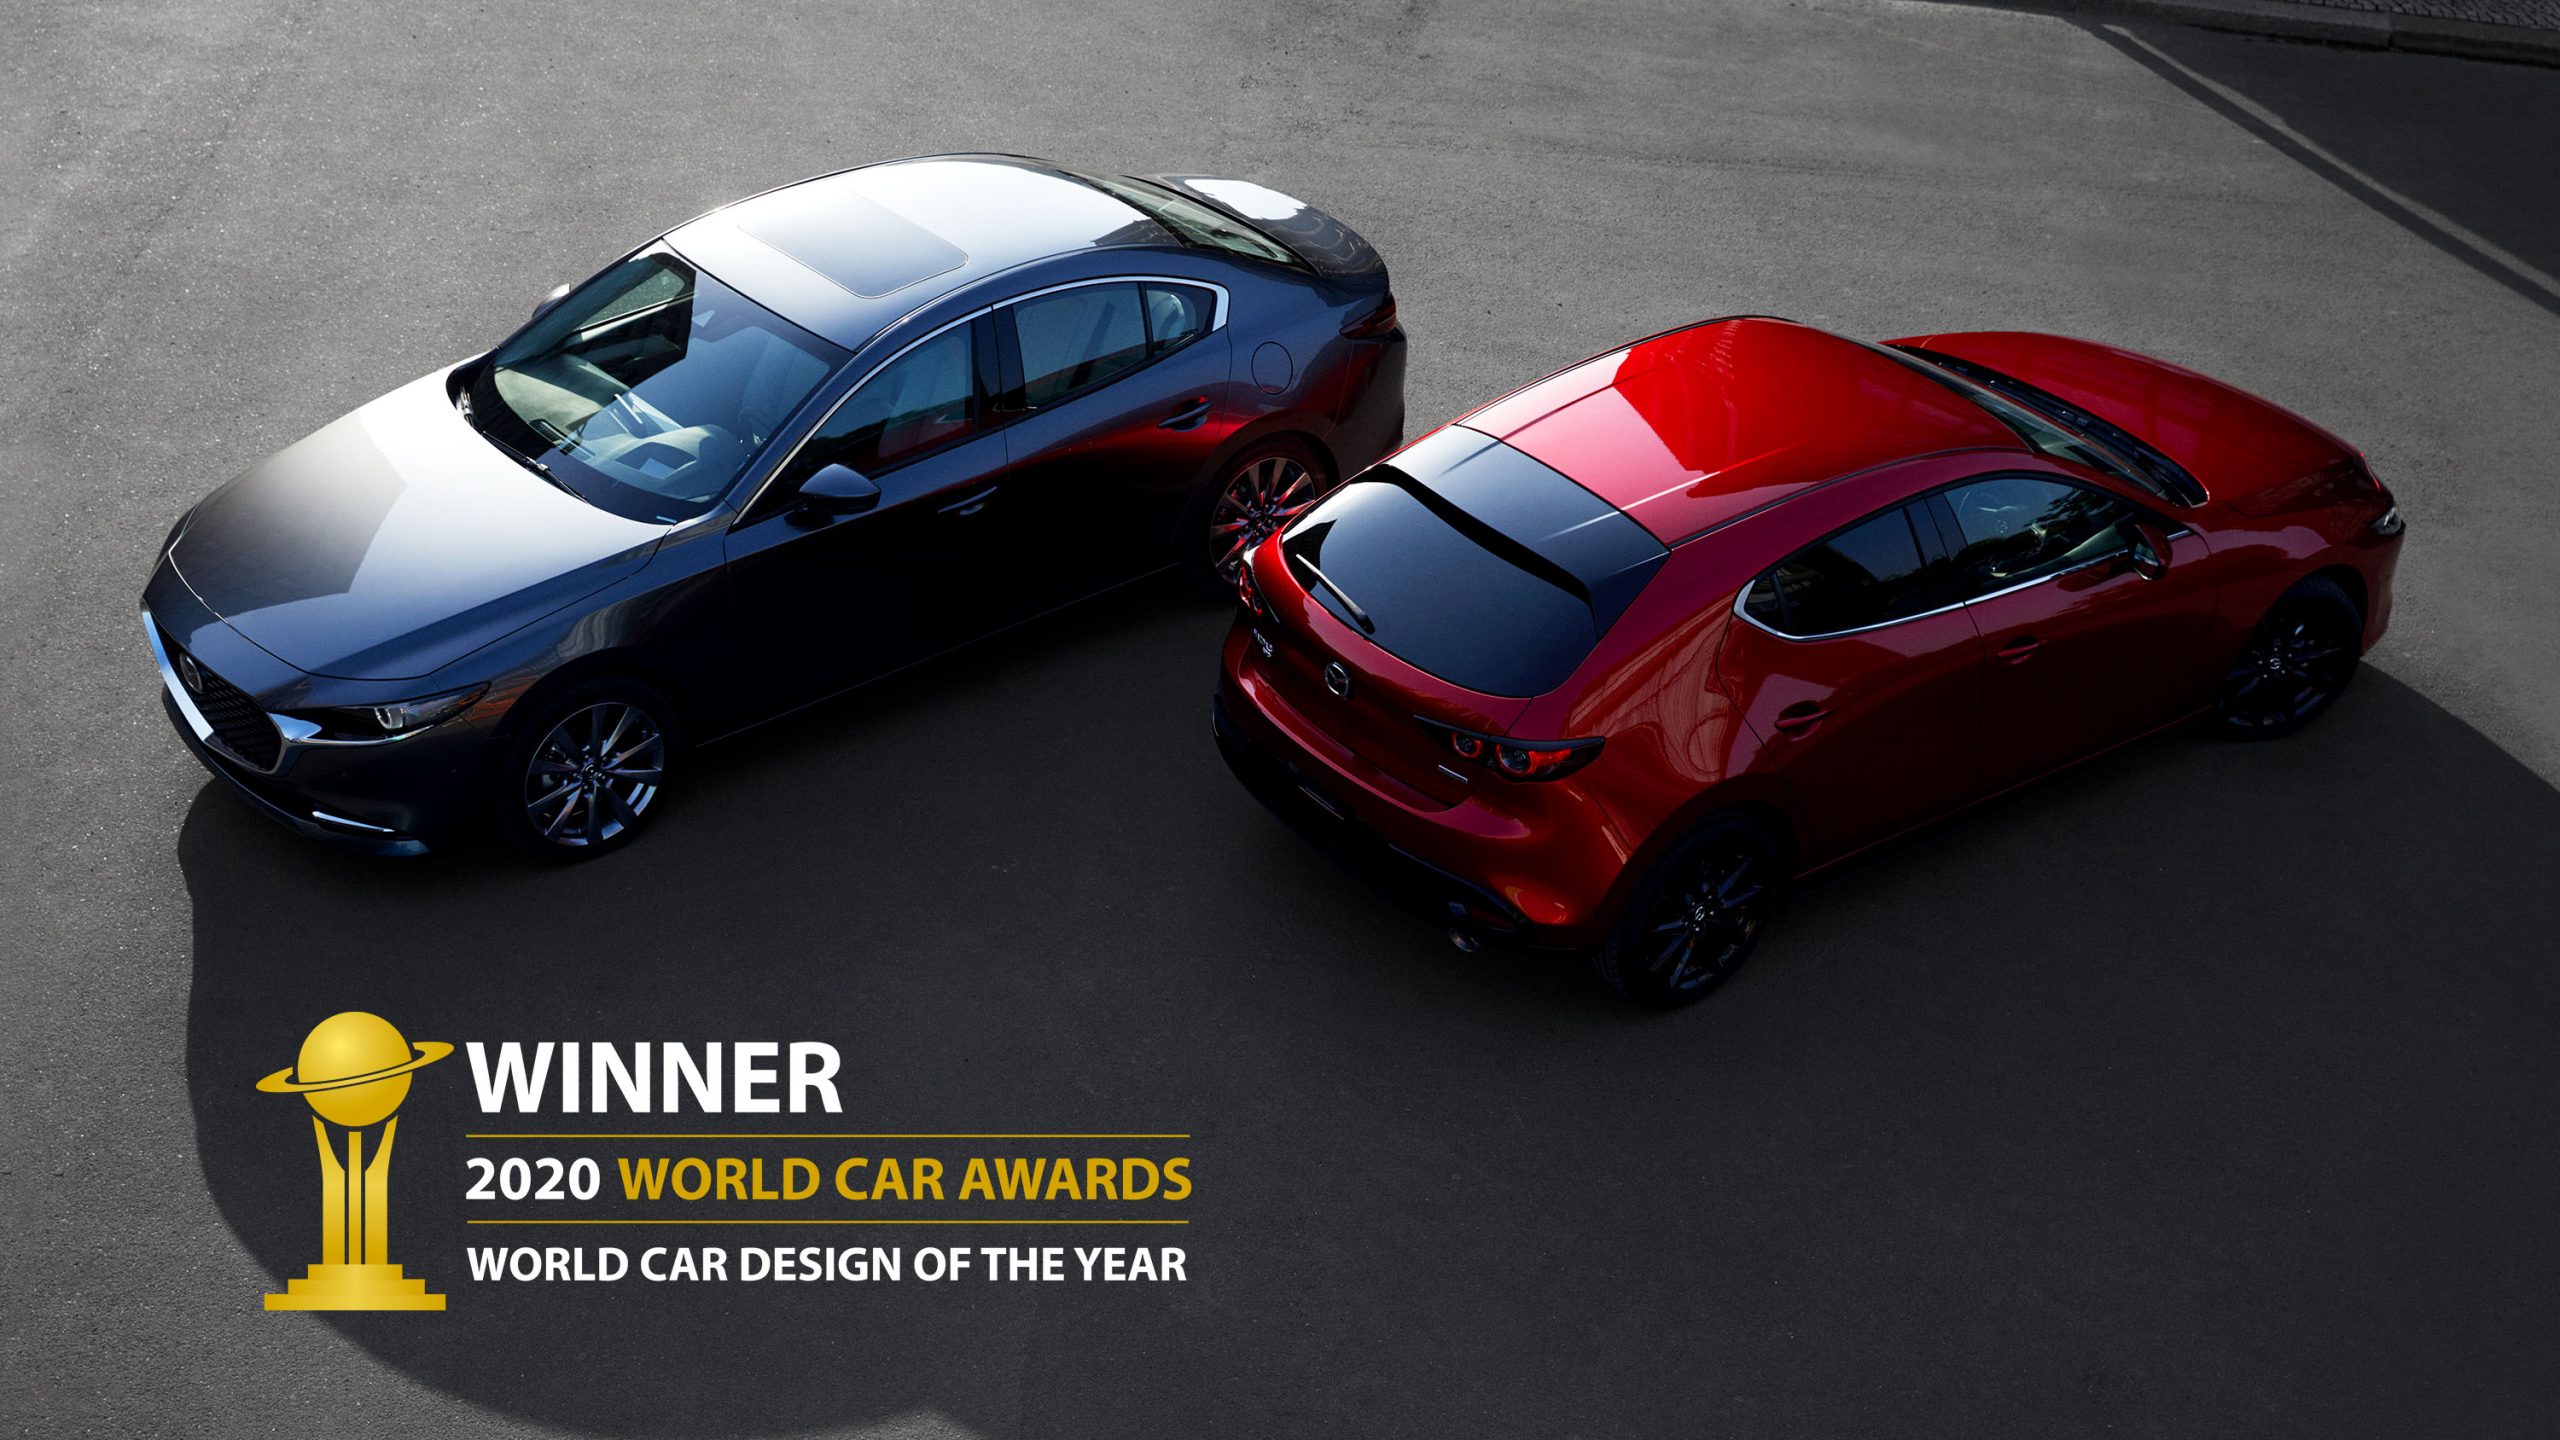 ALL-NEW MAZDA3 คว้ารางวัลรถยนต์ที่ออกแบบยอดเยี่ยมแห่งปี WORLD CAR DESIGN OF THE YEAR 2020